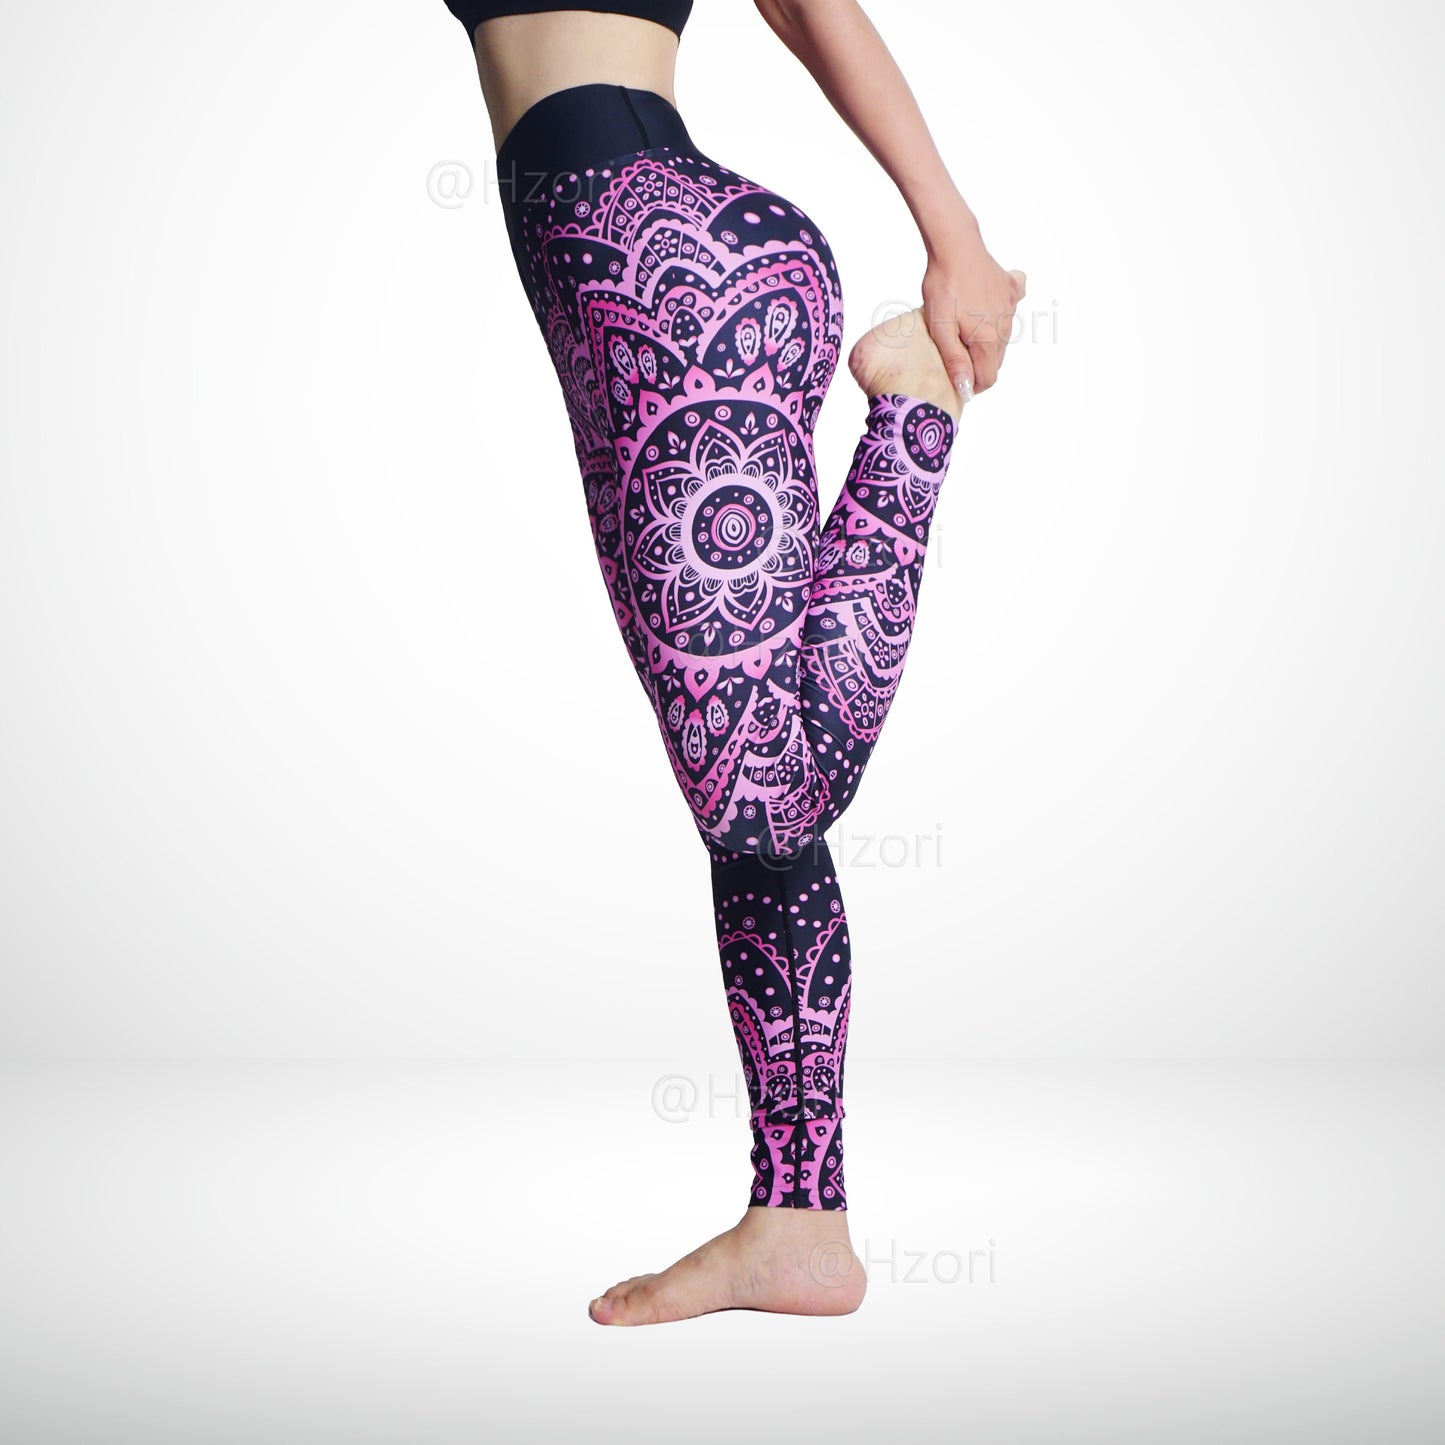 HZORI® |High Waist Printed Yoga Pants for Women, Tummy Control Running Sports Workout Yoga Leggings|Sunflower Purple Style